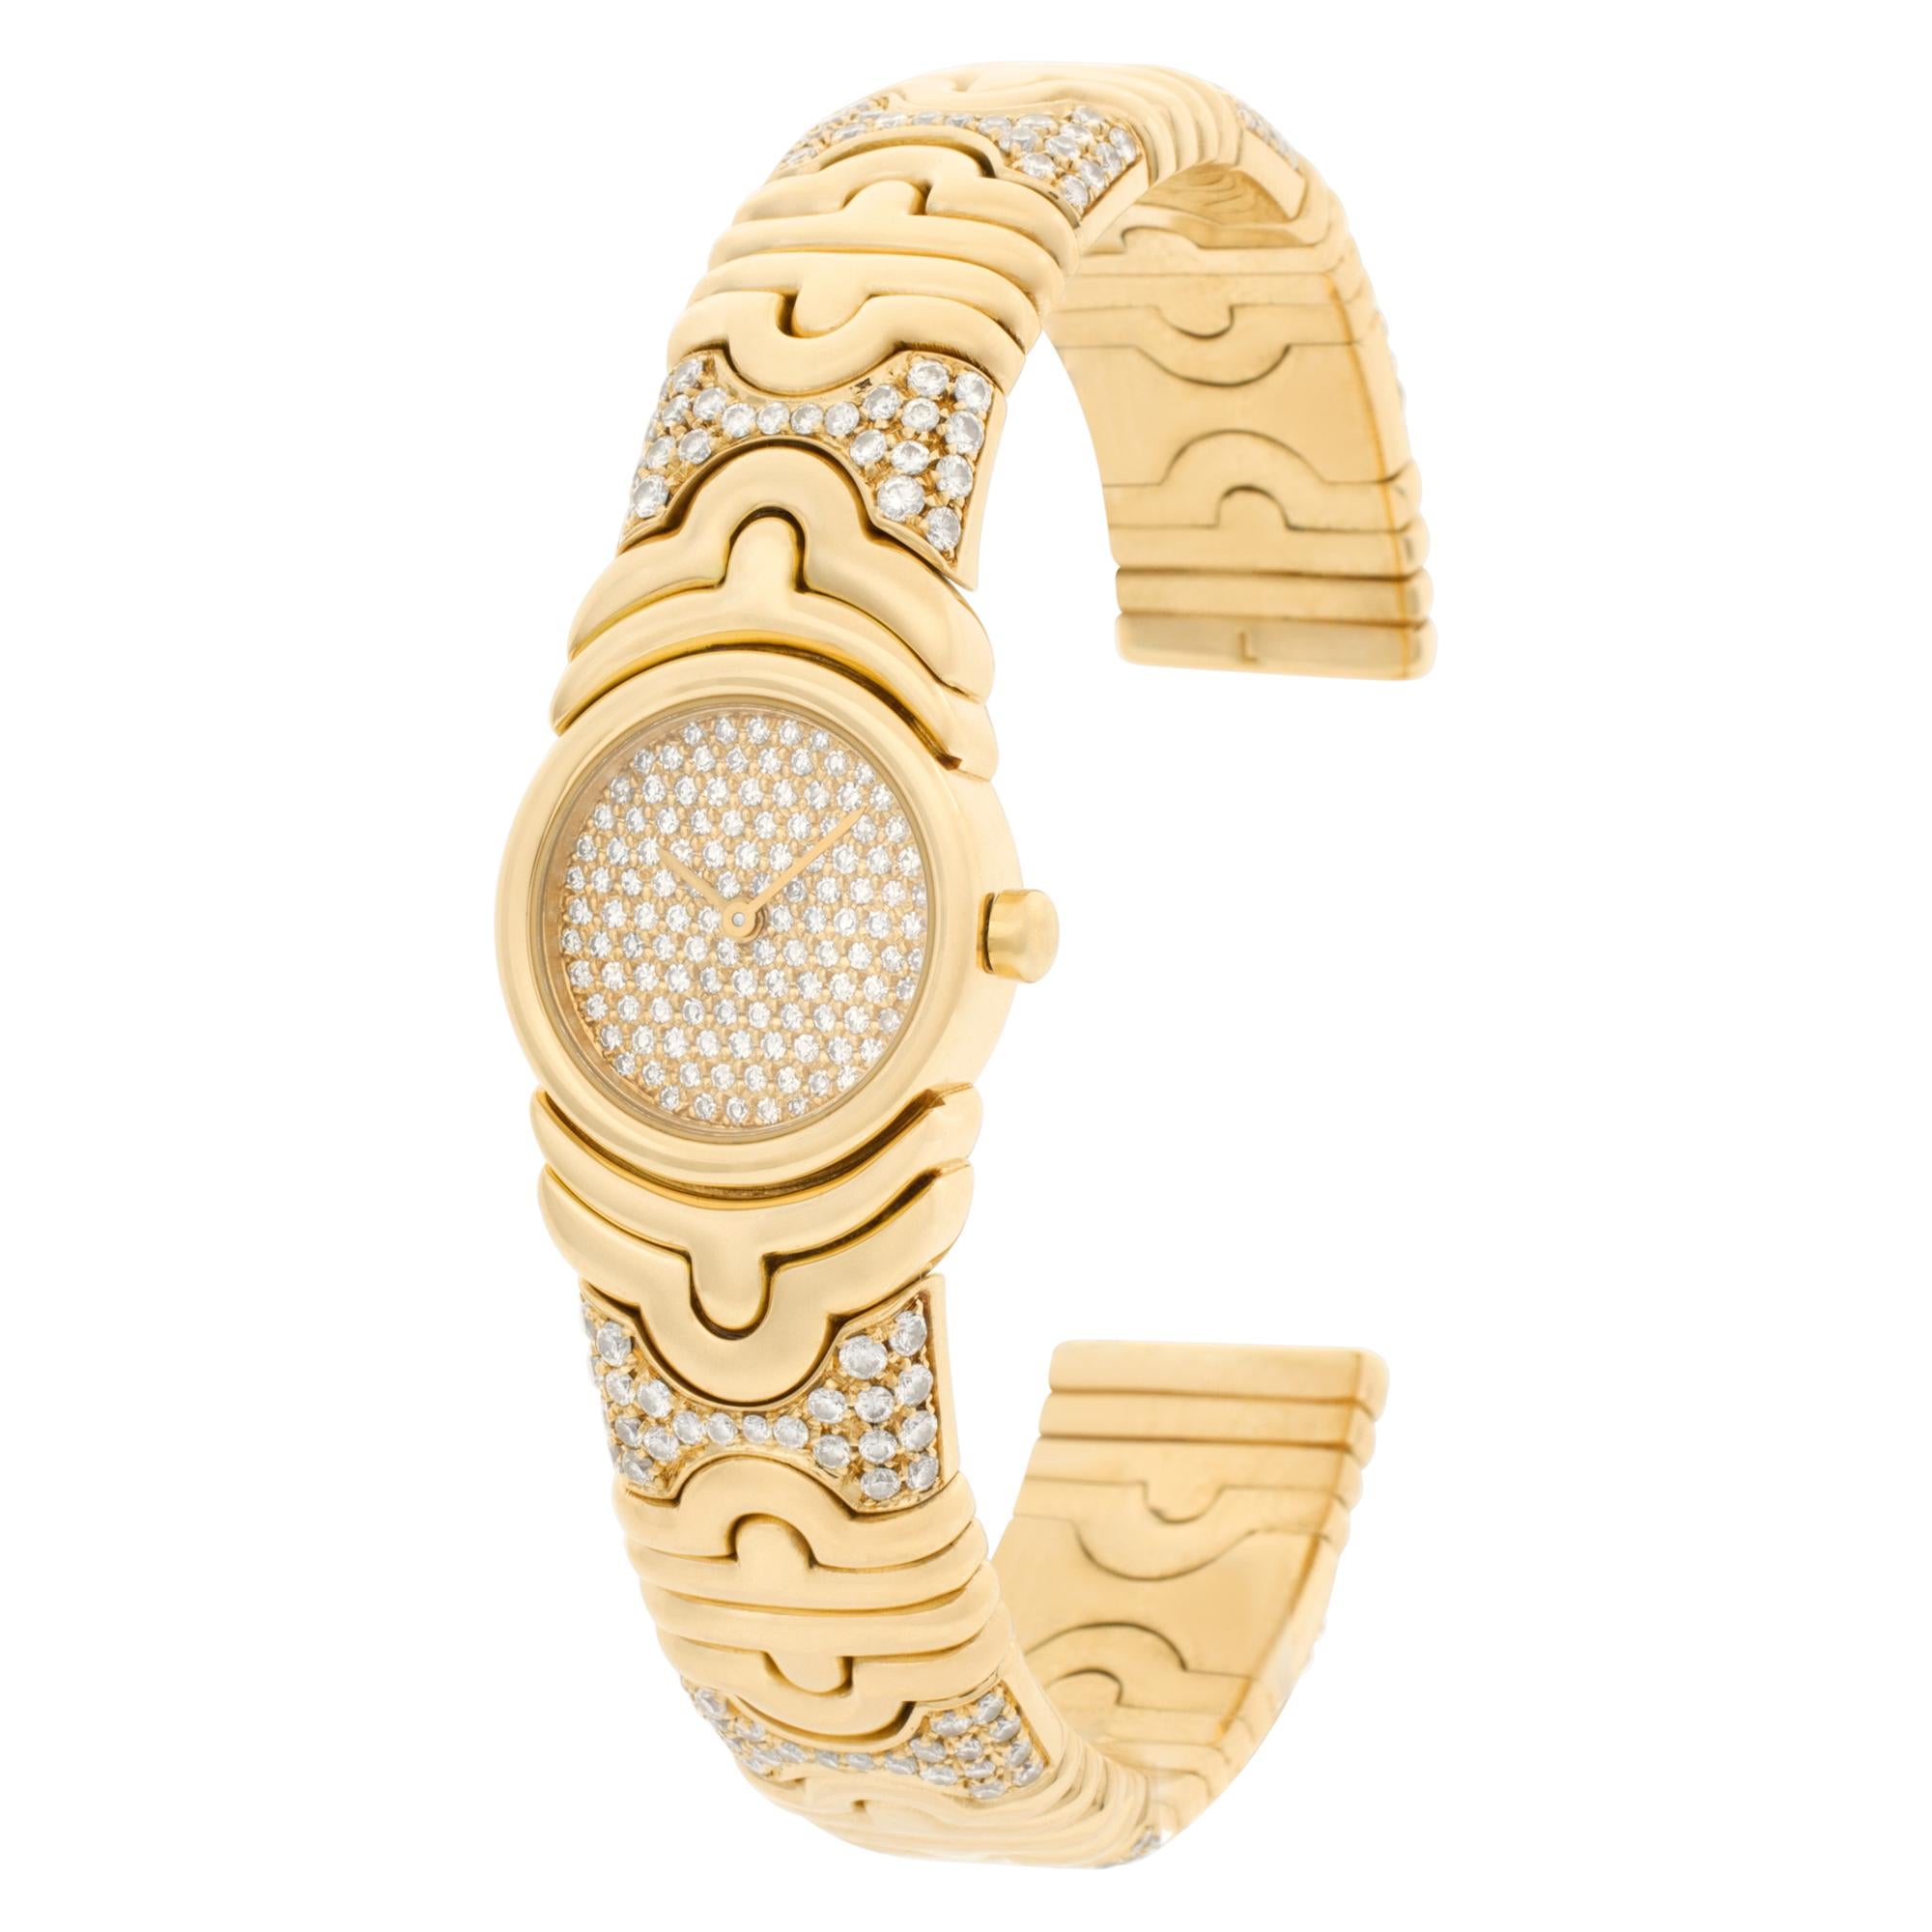 Bvlgari Parentesi diamond watch in 18k, with diamond dial and diamonds on the band. Quartz. 20 mm case size. Ref BJ 01. Fits 6-7.5 inches. Circa 2000s. Fine Pre-owned Bvlgari / Bulgari Watch.

Certified preowned Dress Bvlgari Parentesi BJ 01 watch